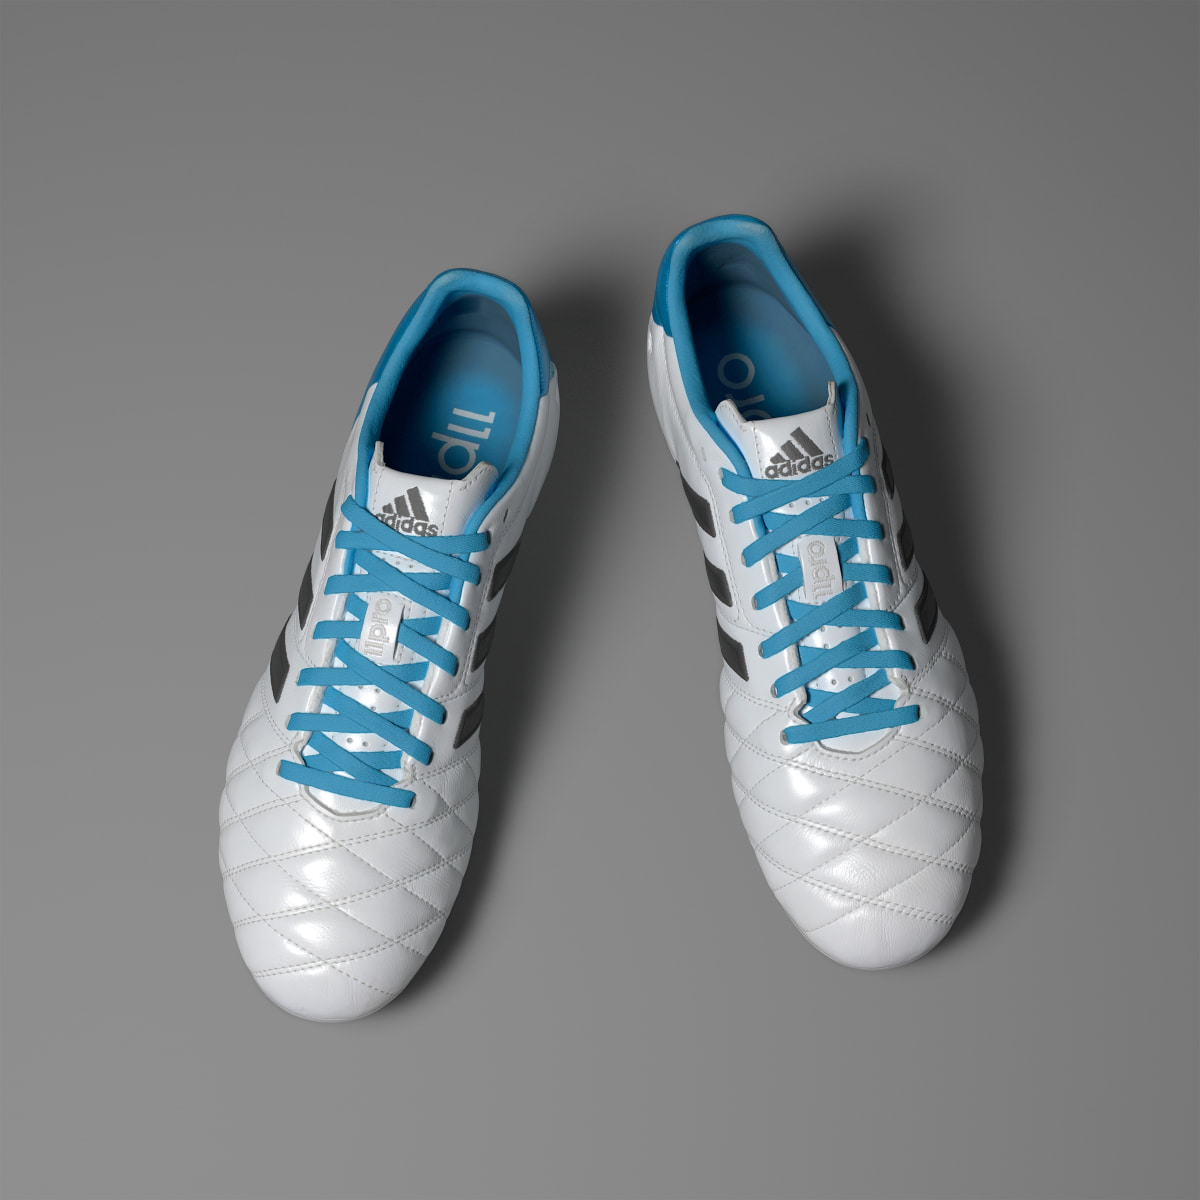 Adidas Botas de Futebol 11Pro Toni Kroos – Piso firme. 5